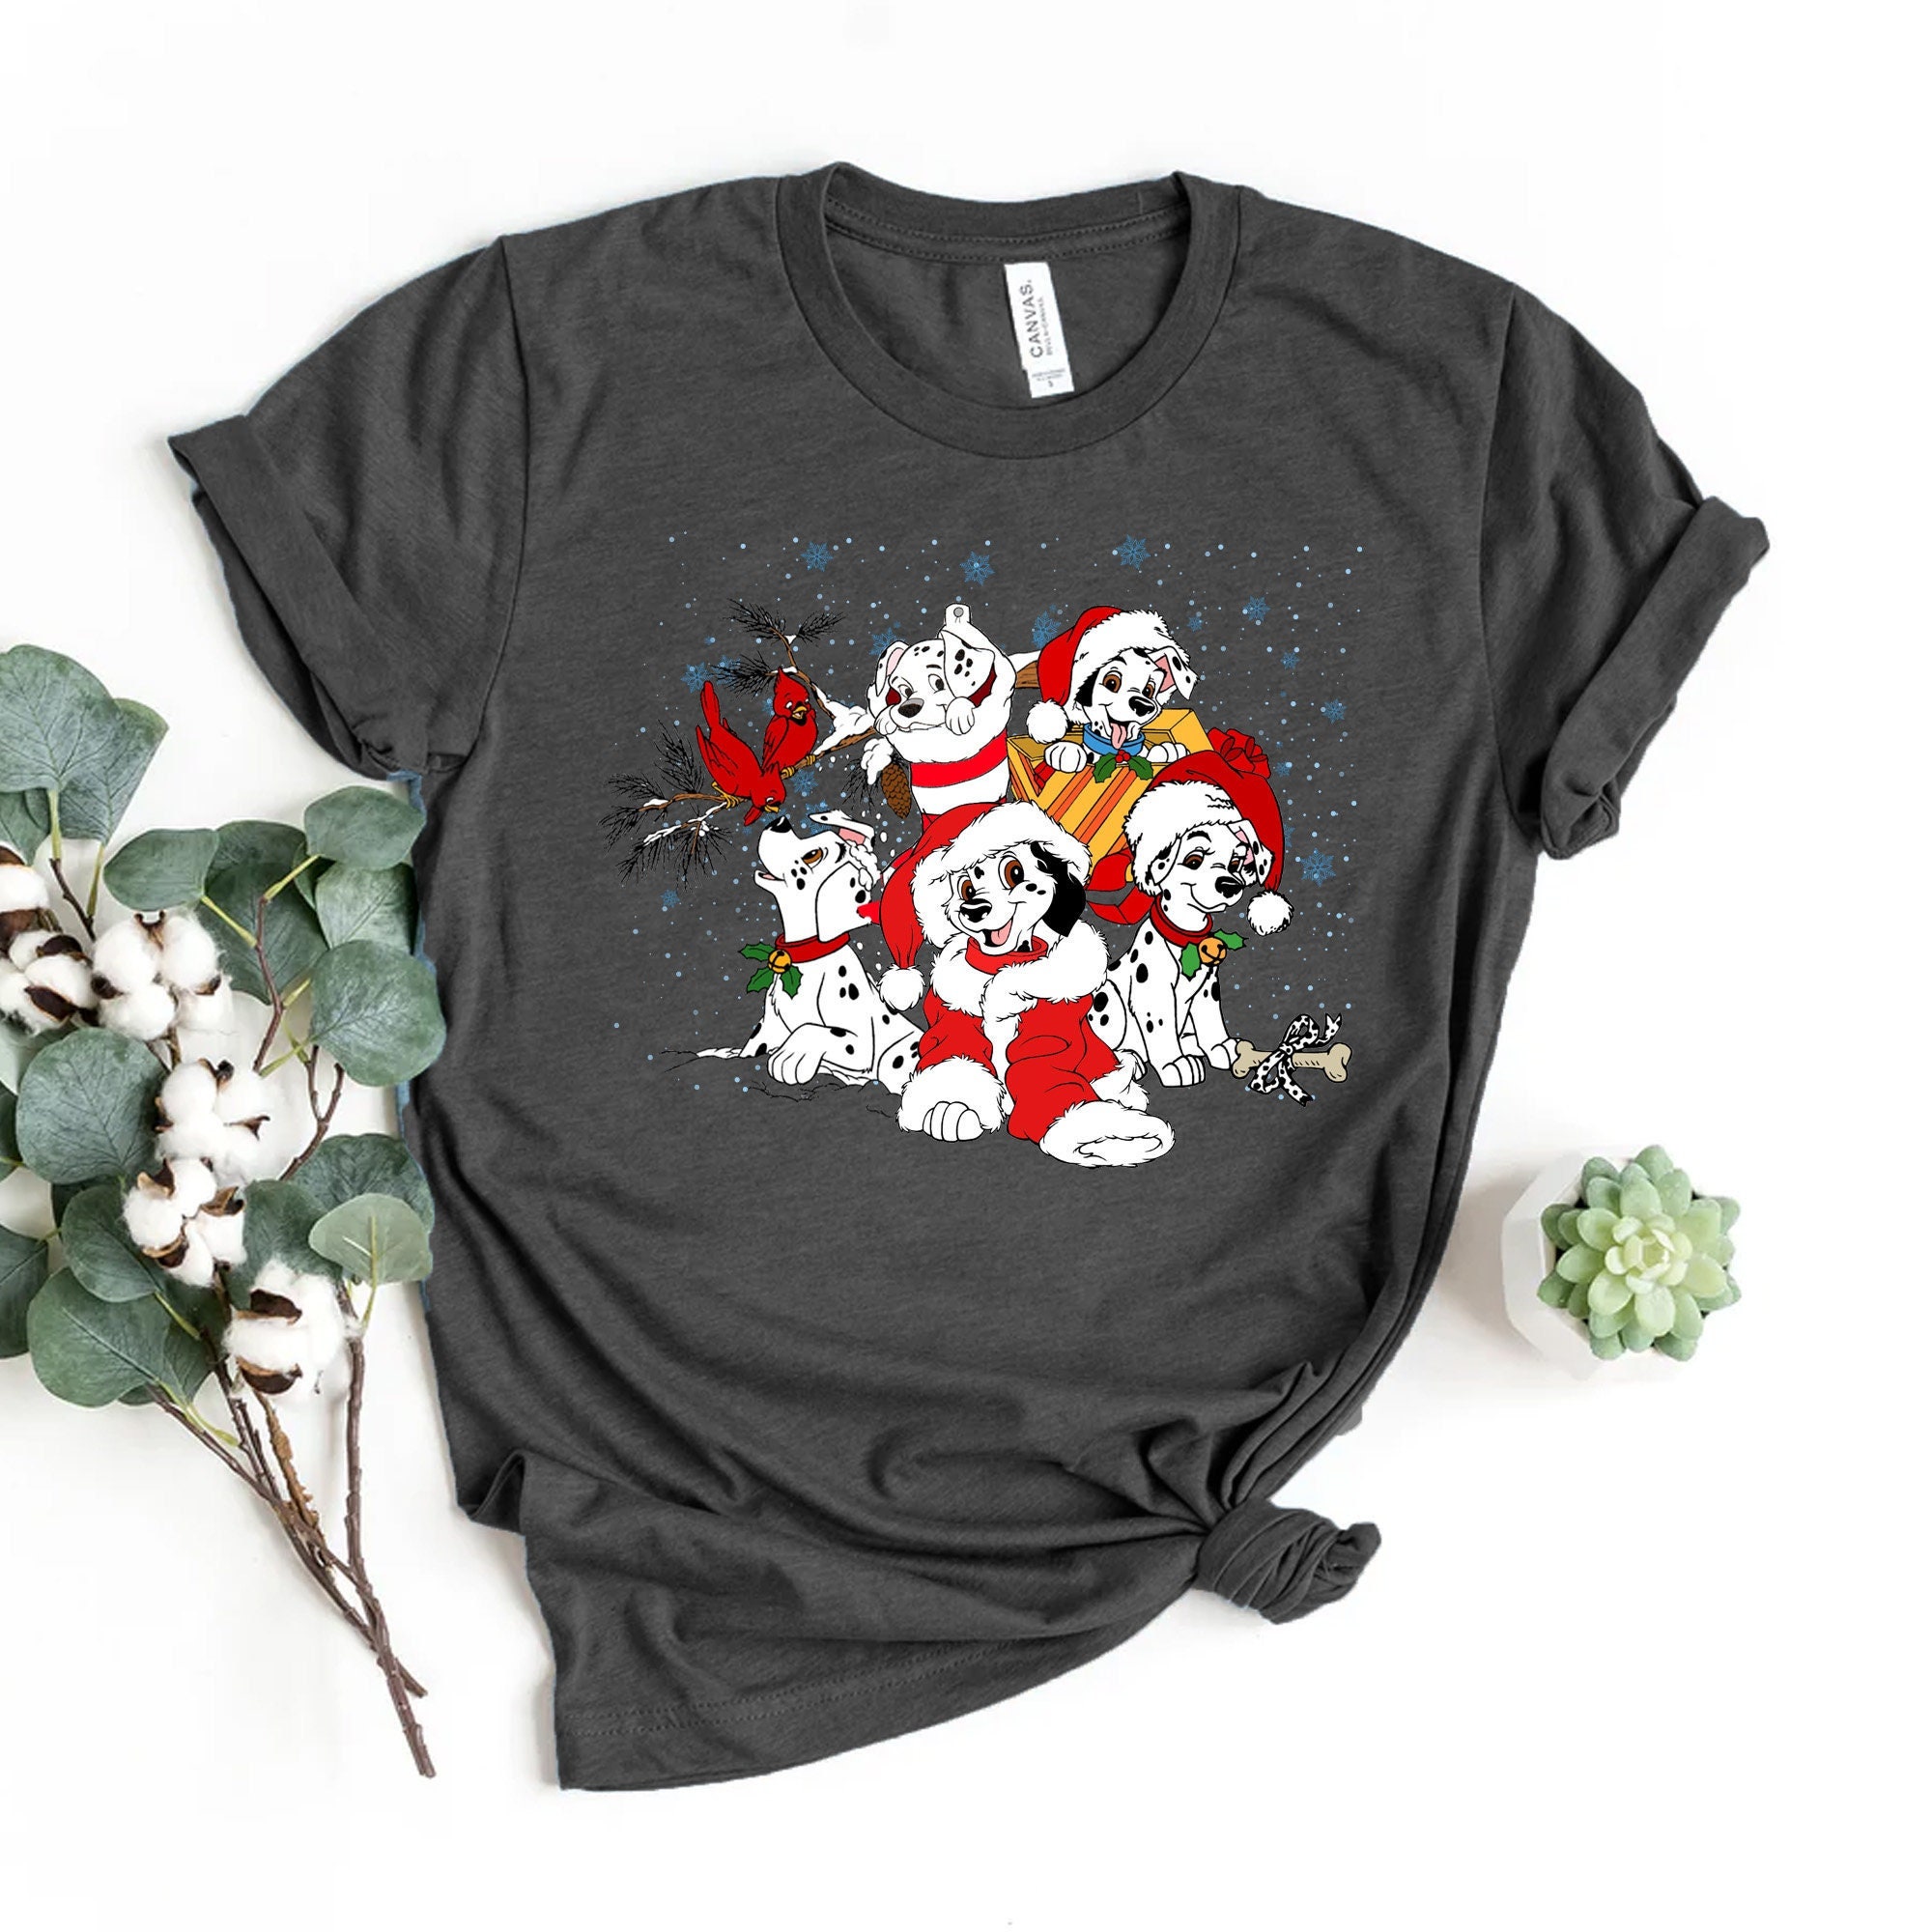 Discover Dalmatian Dogs Christmas Shirt Disney 101 Dalmatians Dog Shirt